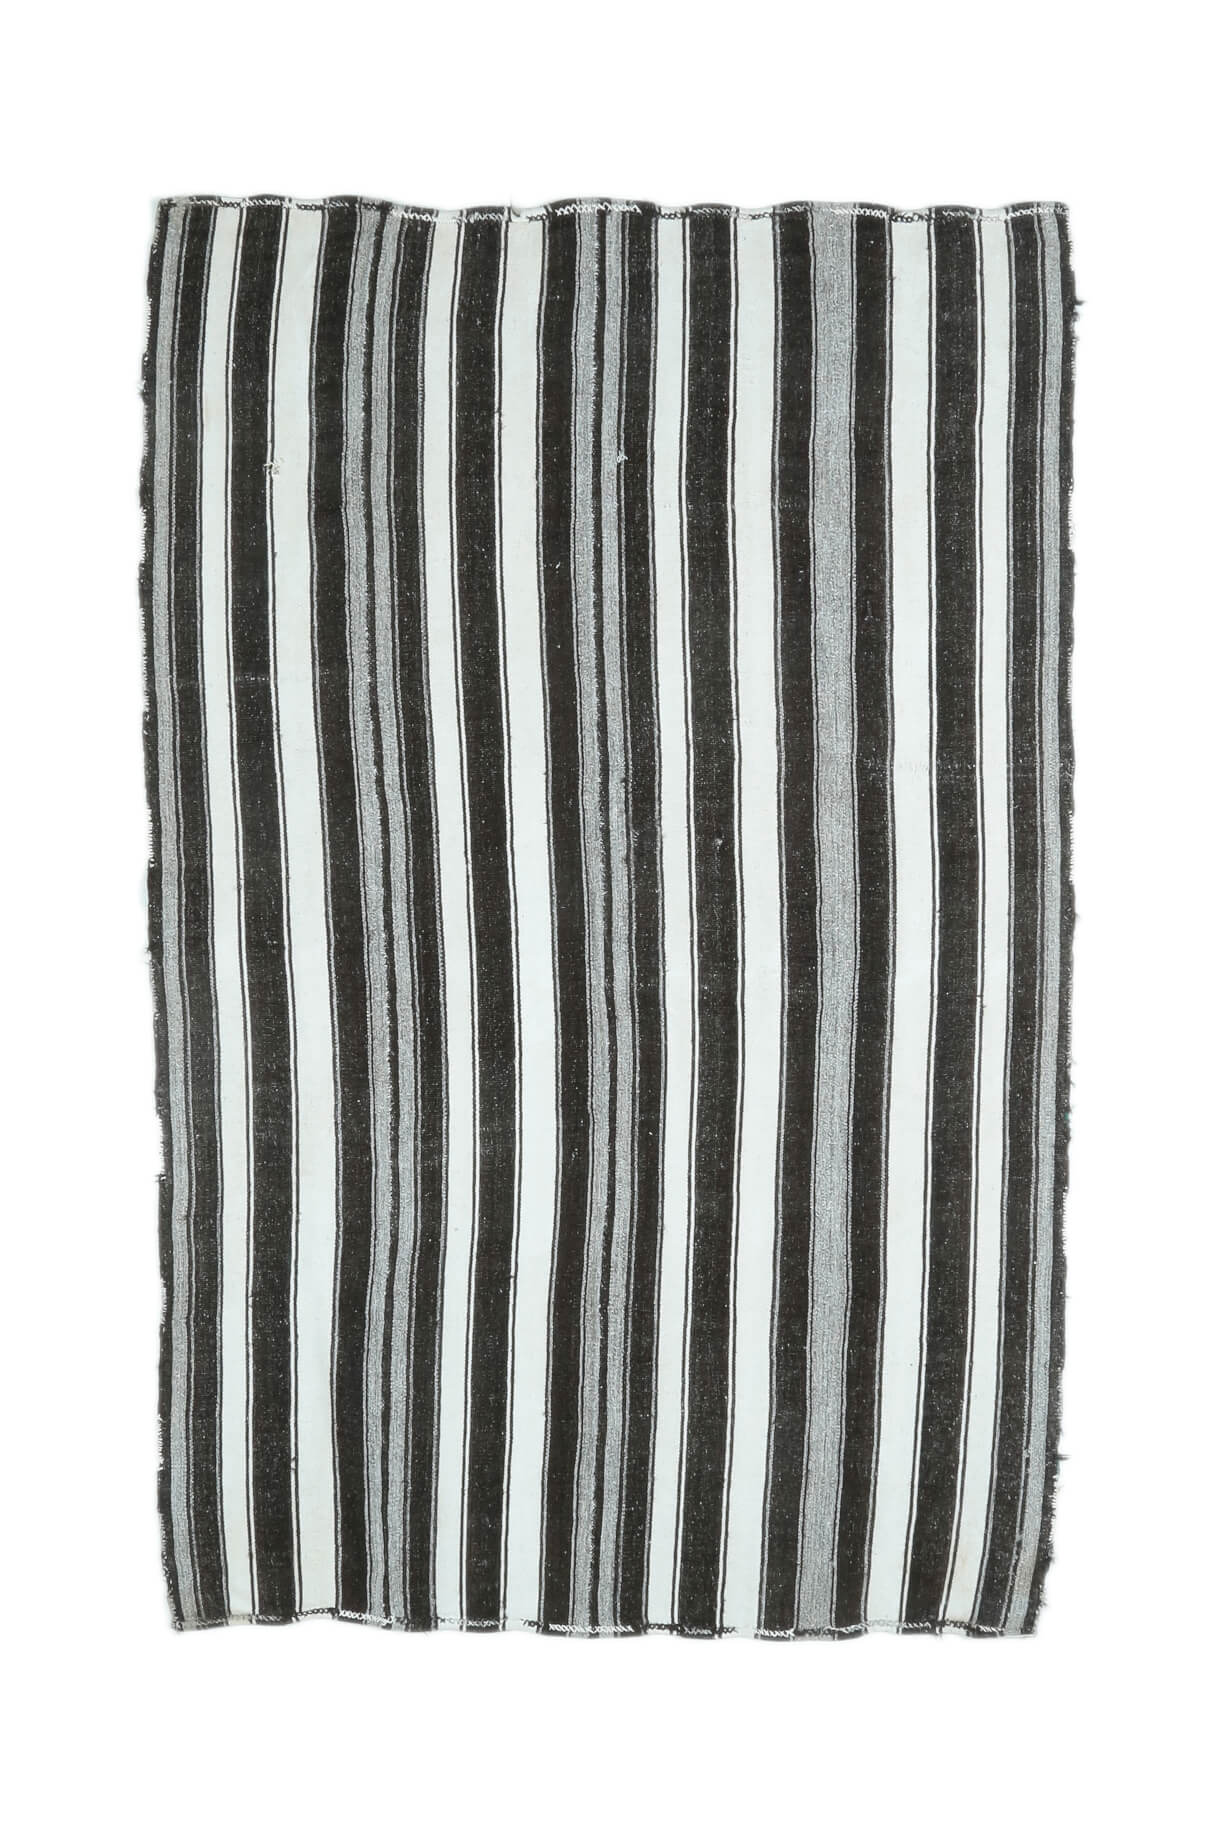 Hattie - Black & White Striped Jute Kilim